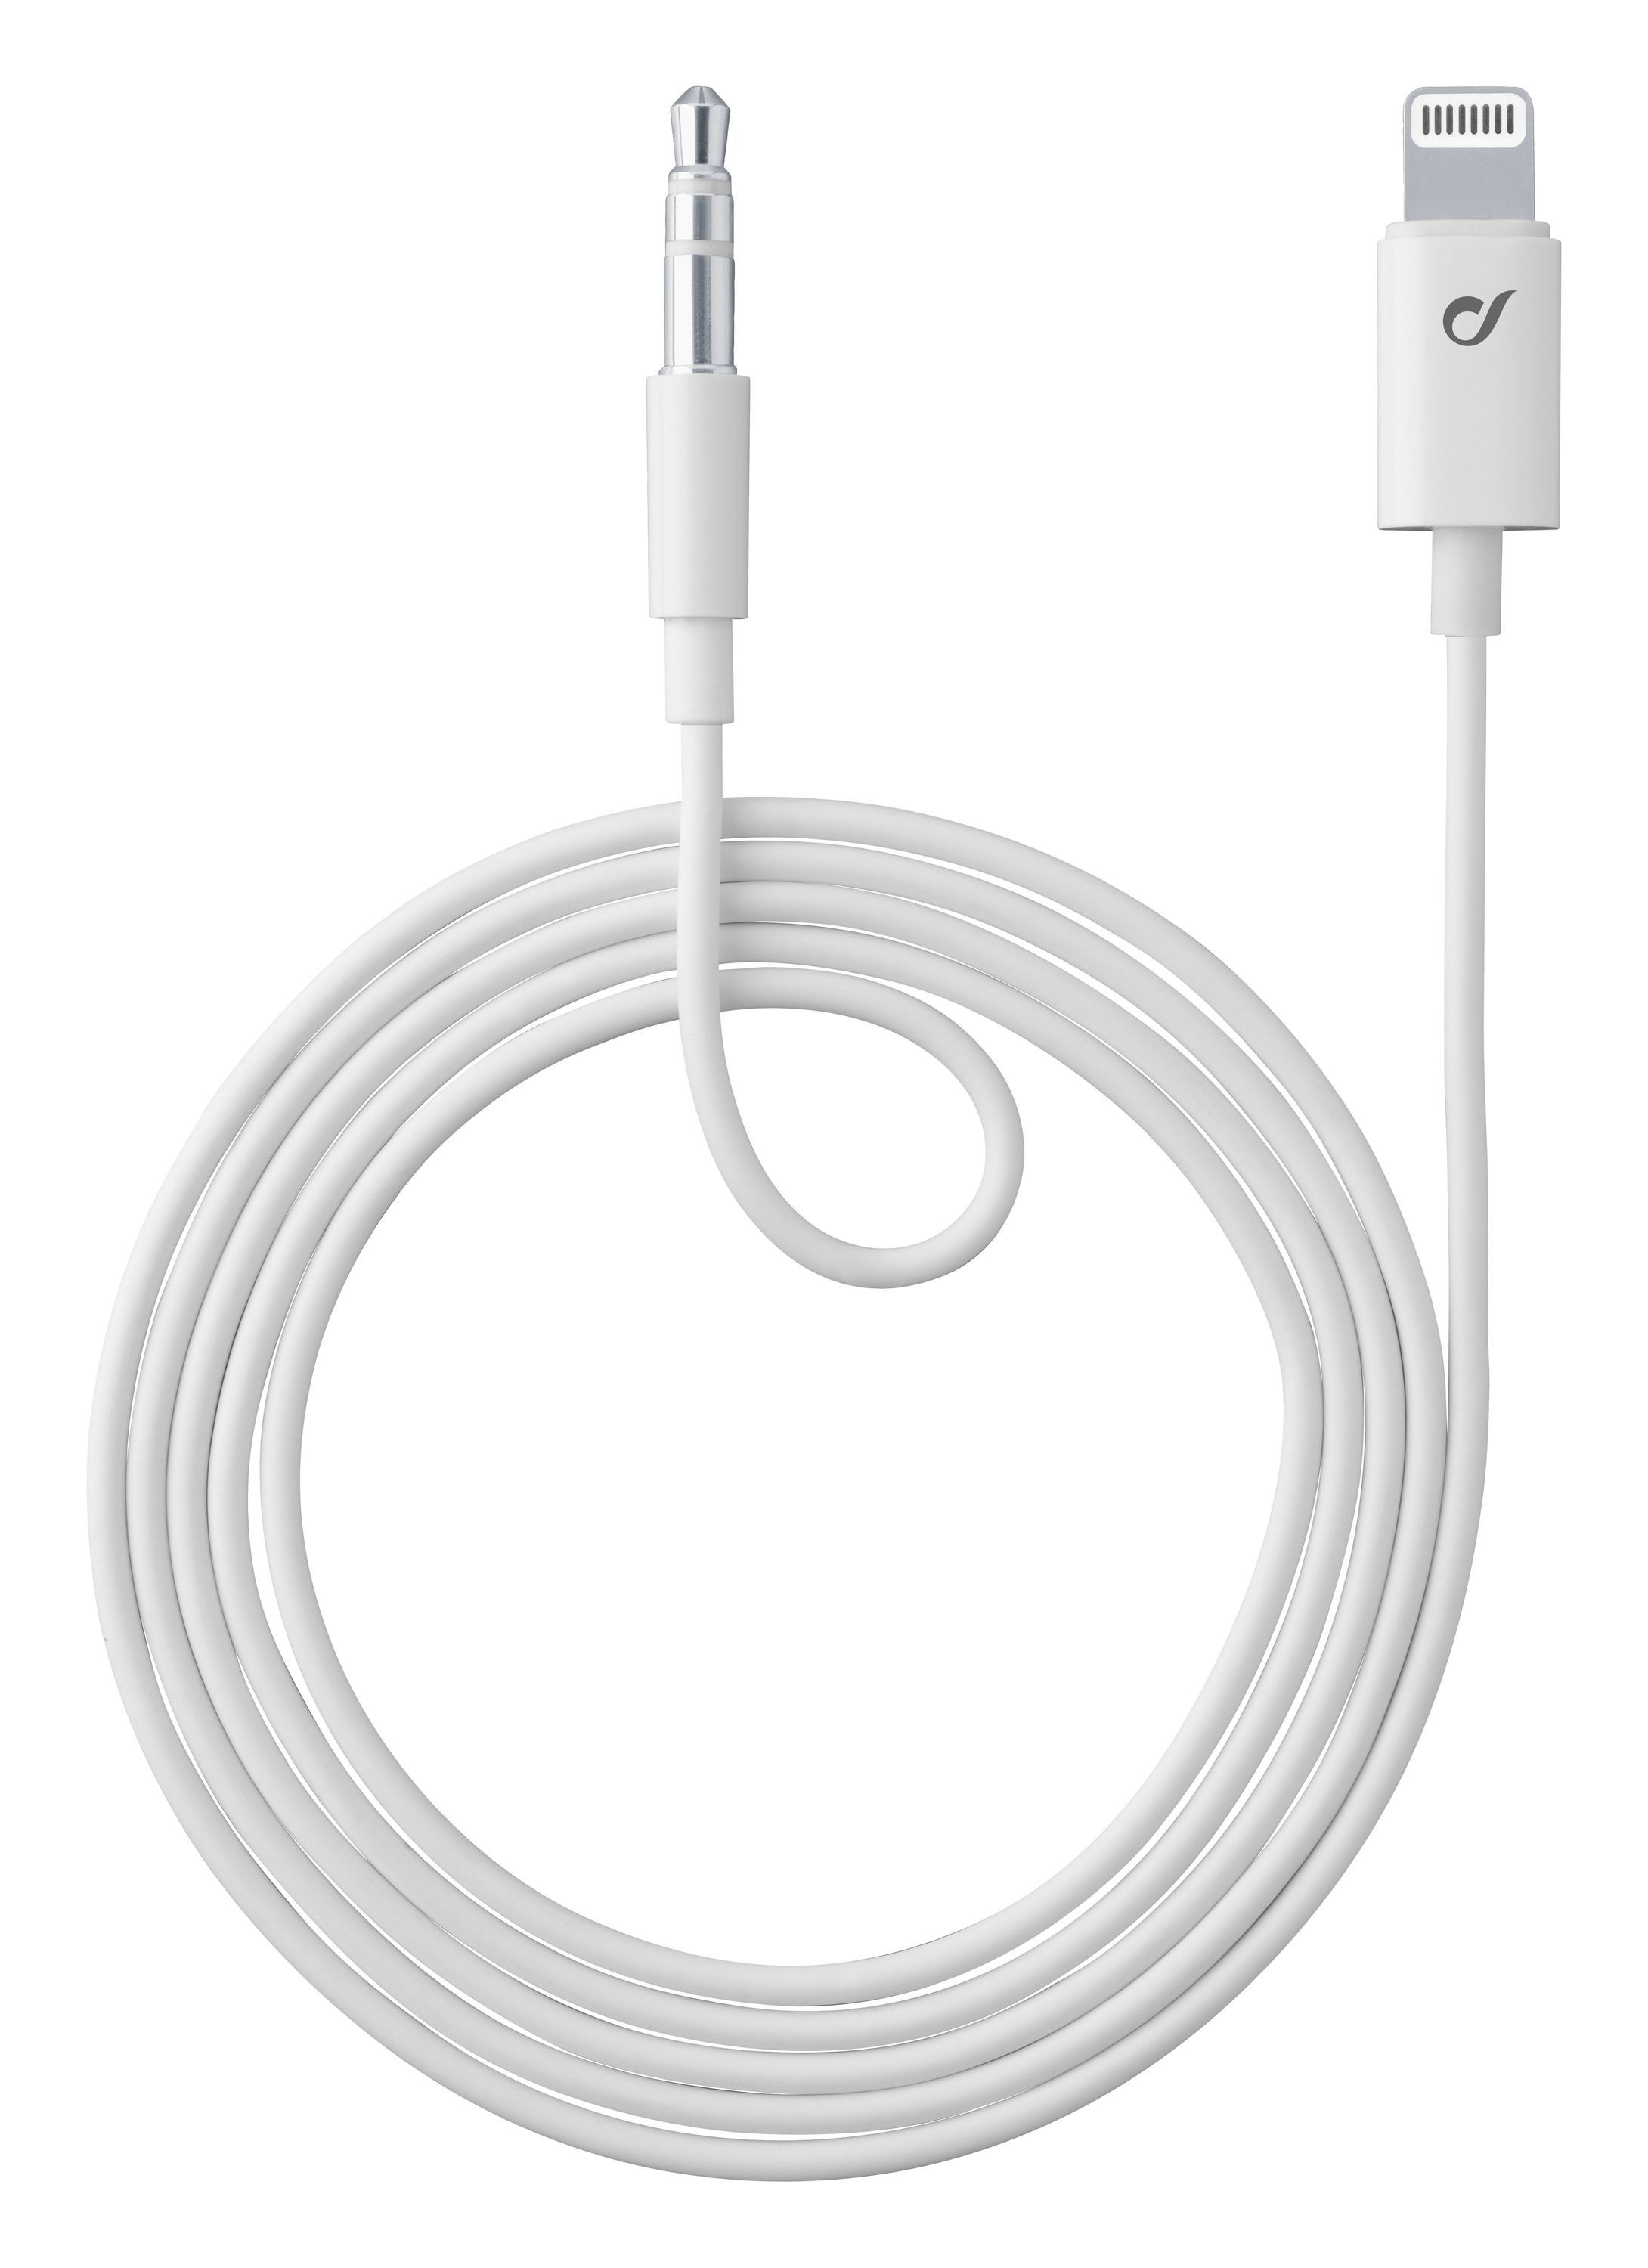 Audio kabel Aux Music Cable, konektory Ligtning + 3,5 mm jack, MFI certifikace, bílý